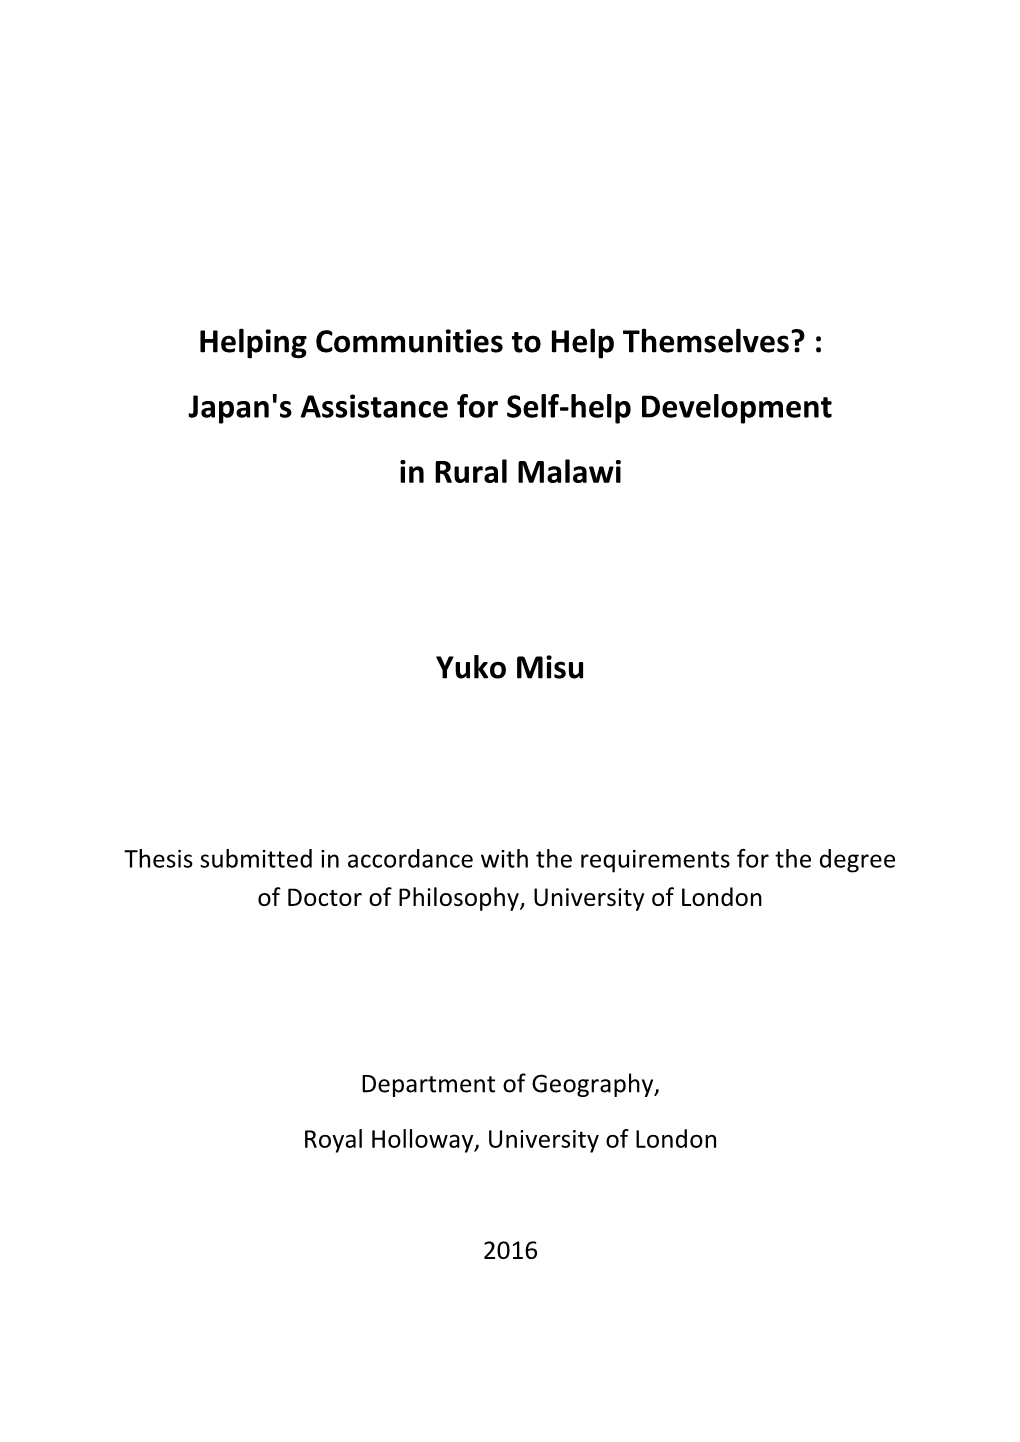 Japan's Assistance for Self-Help Development in Rural Malawi Yuko